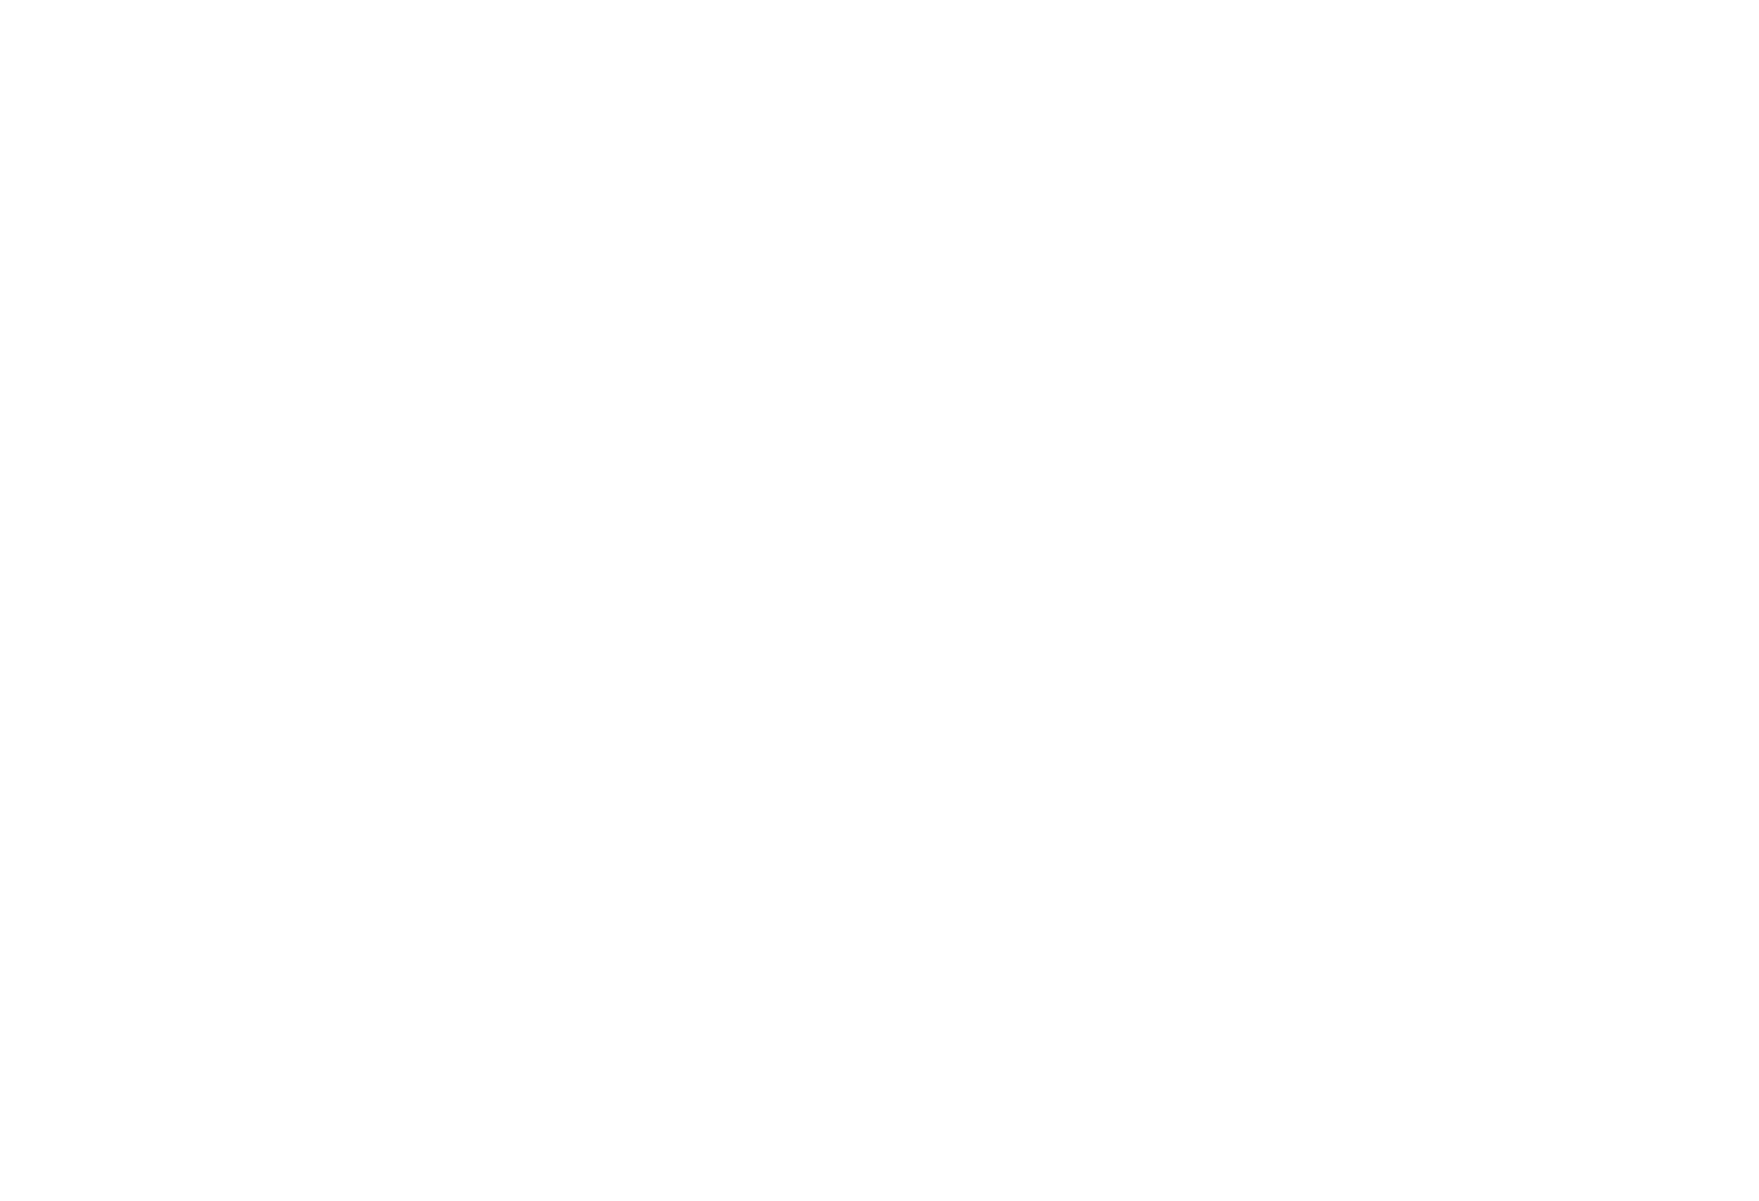 GPCE Melbourne